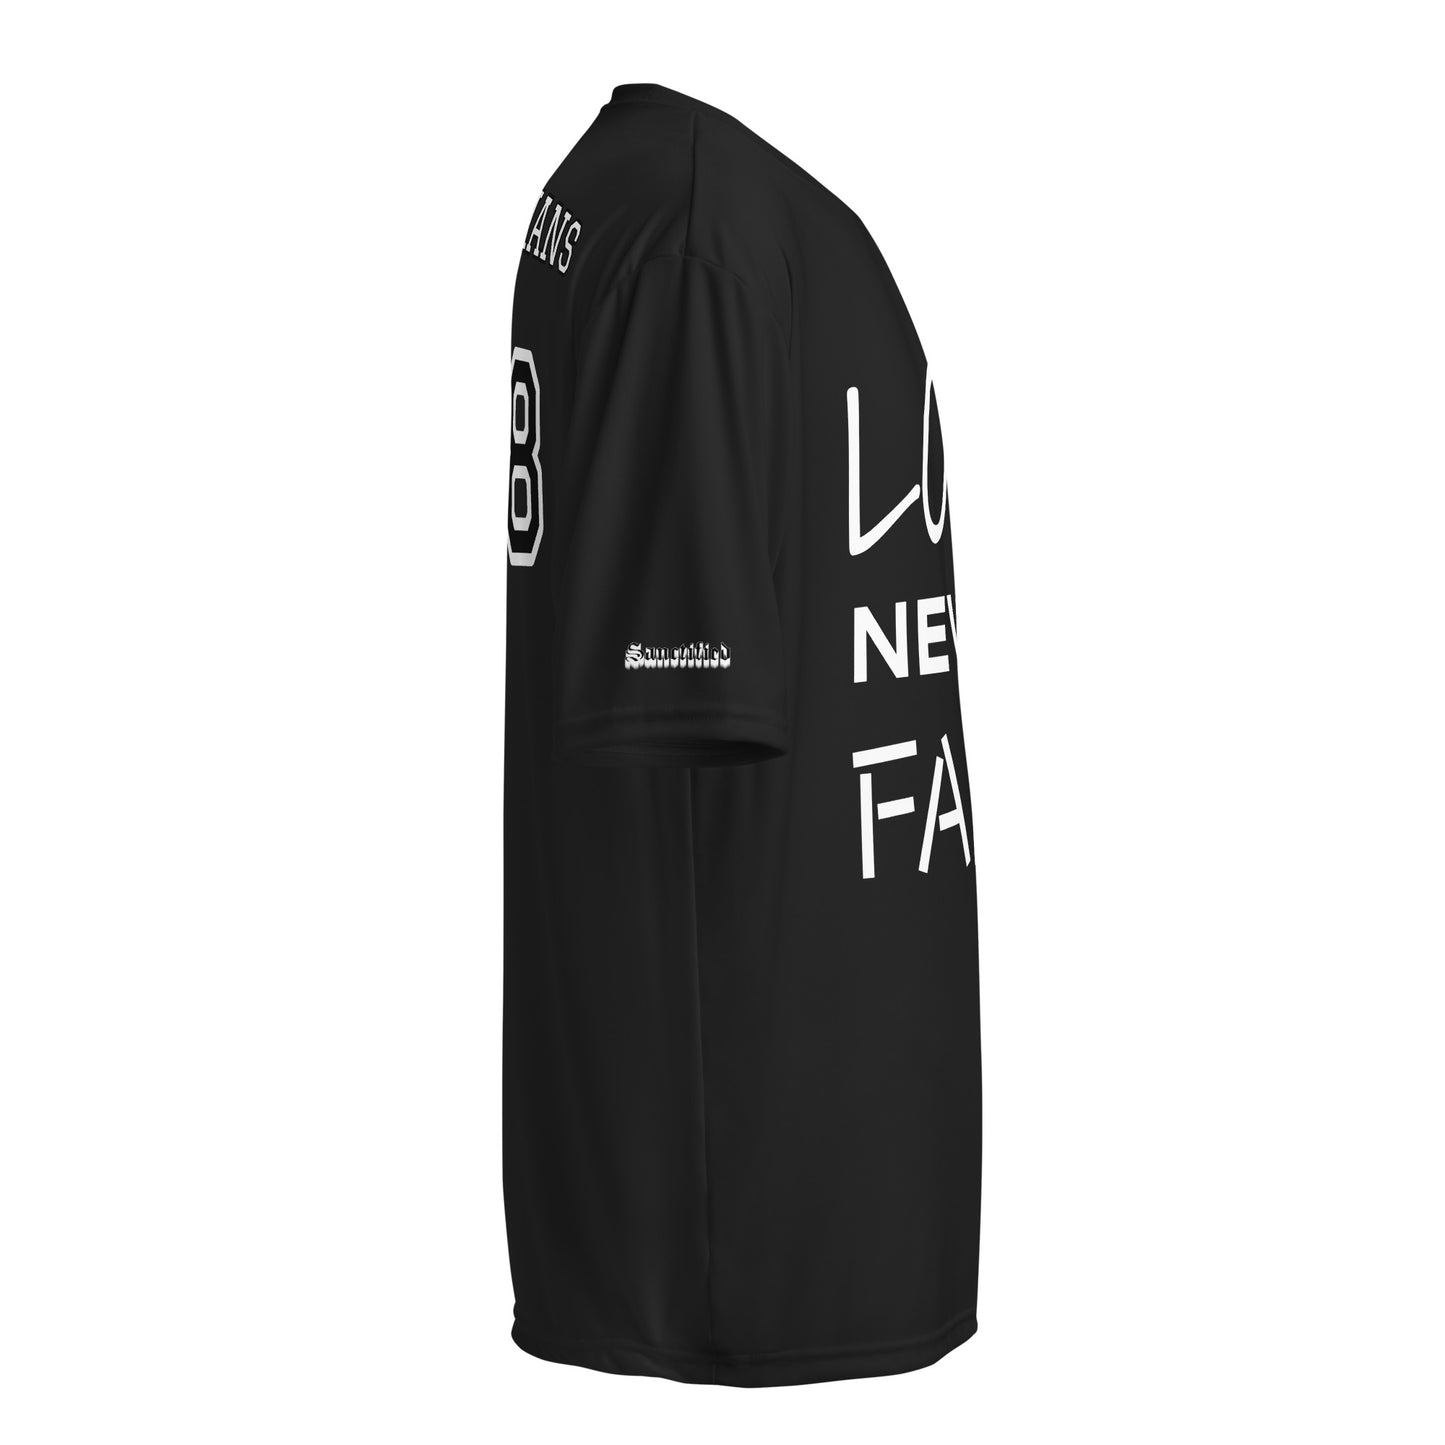 LOVE NEVER FAILS- Unisex performance crew neck t-shirt